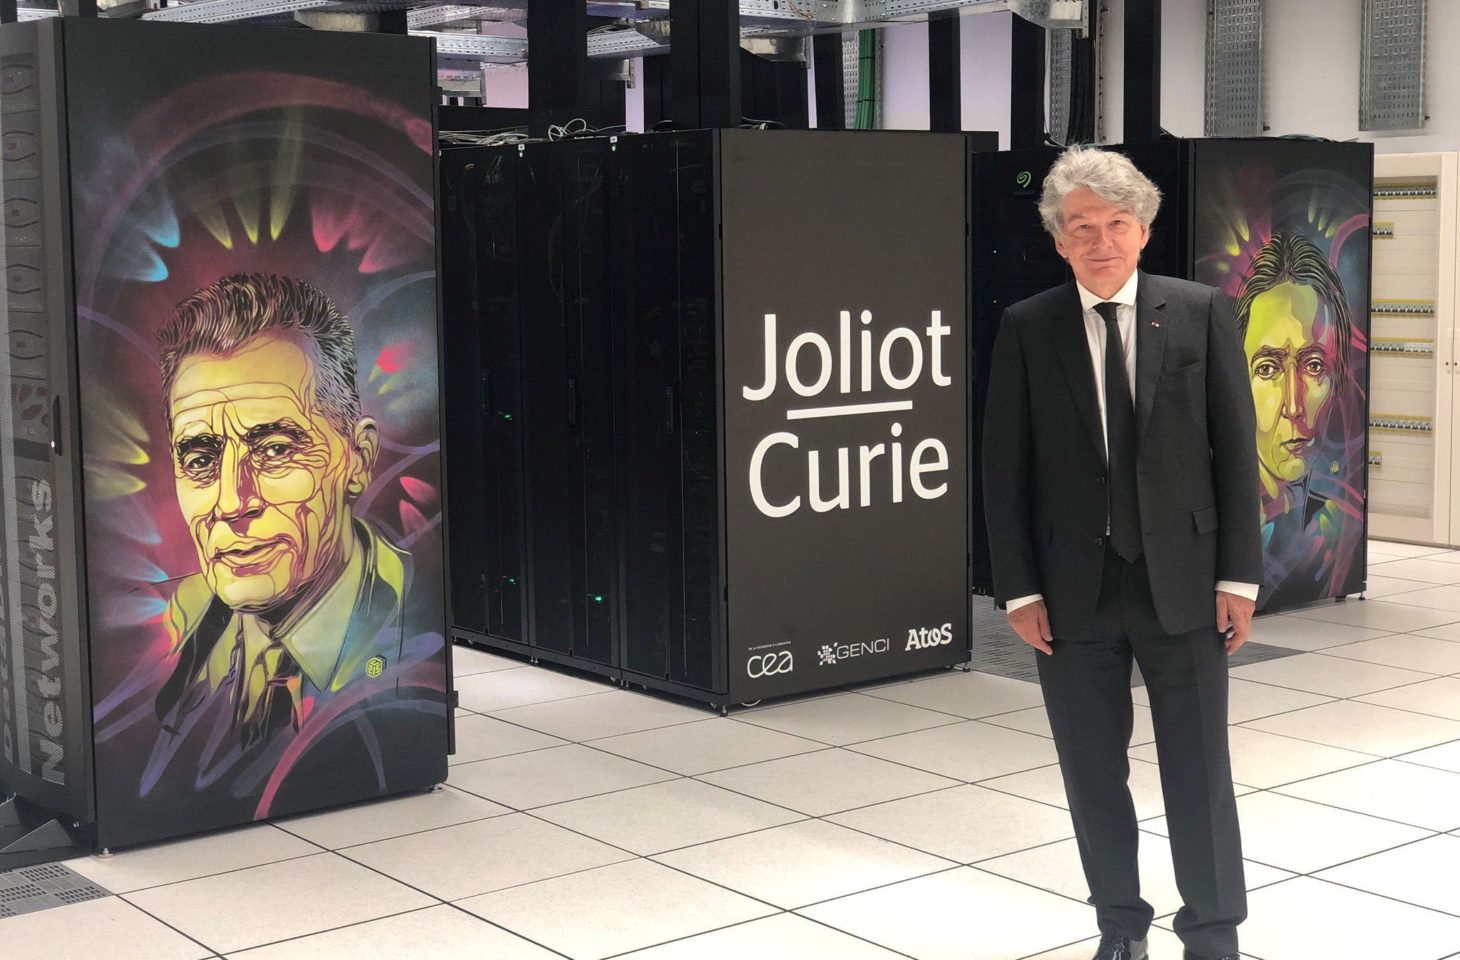 Joliot-Curie